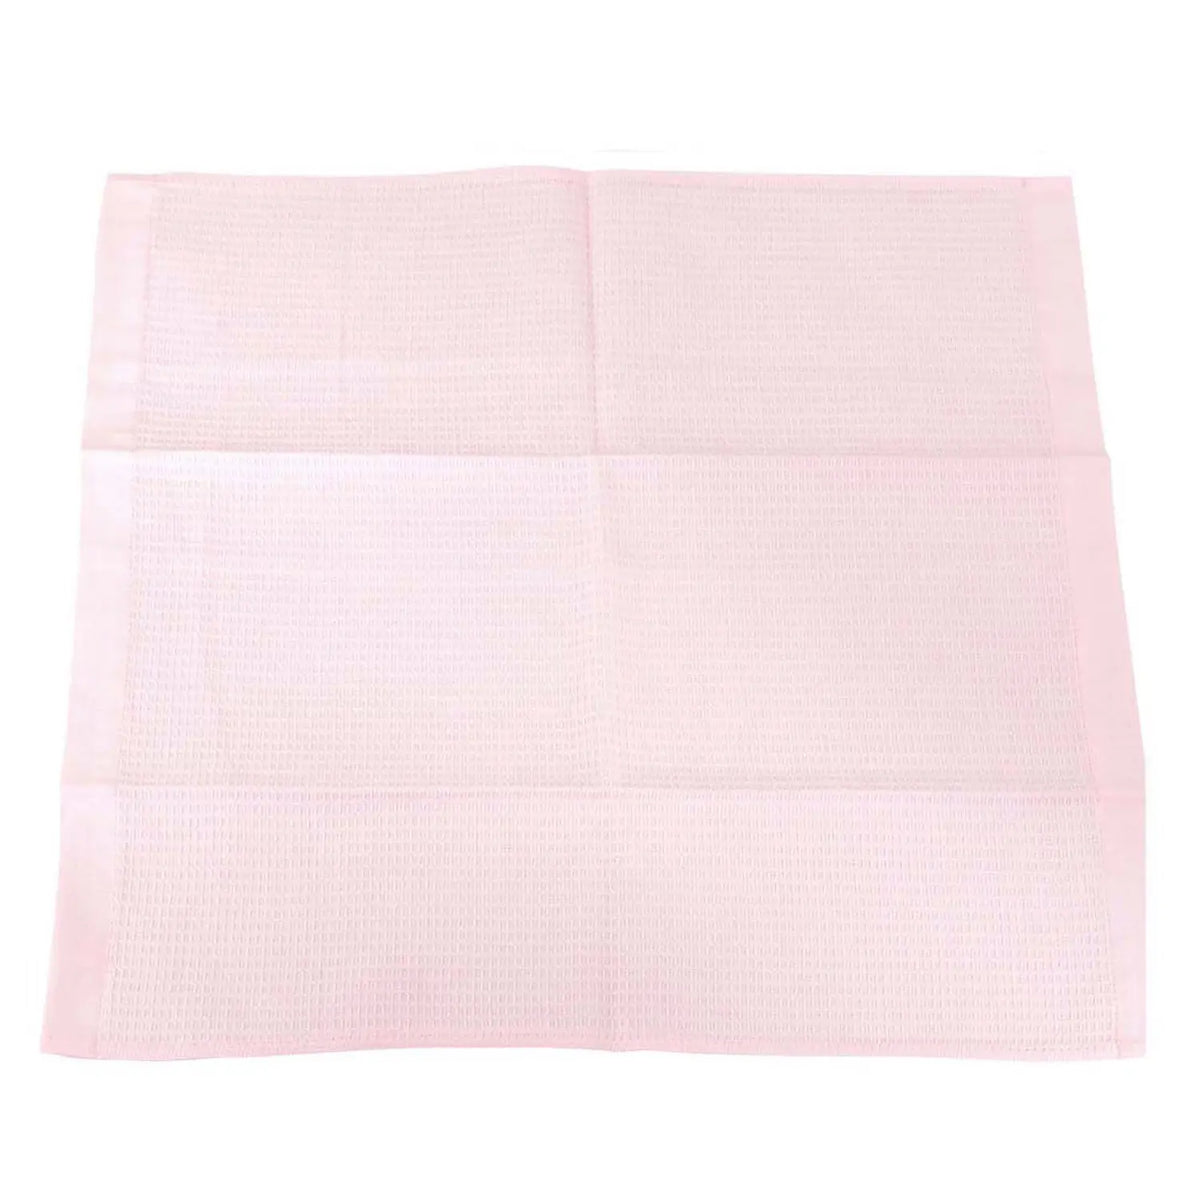 TAKENOTAYORI Cotton Antibacterial Anti-Odor Kitchen Towel 360x350mm